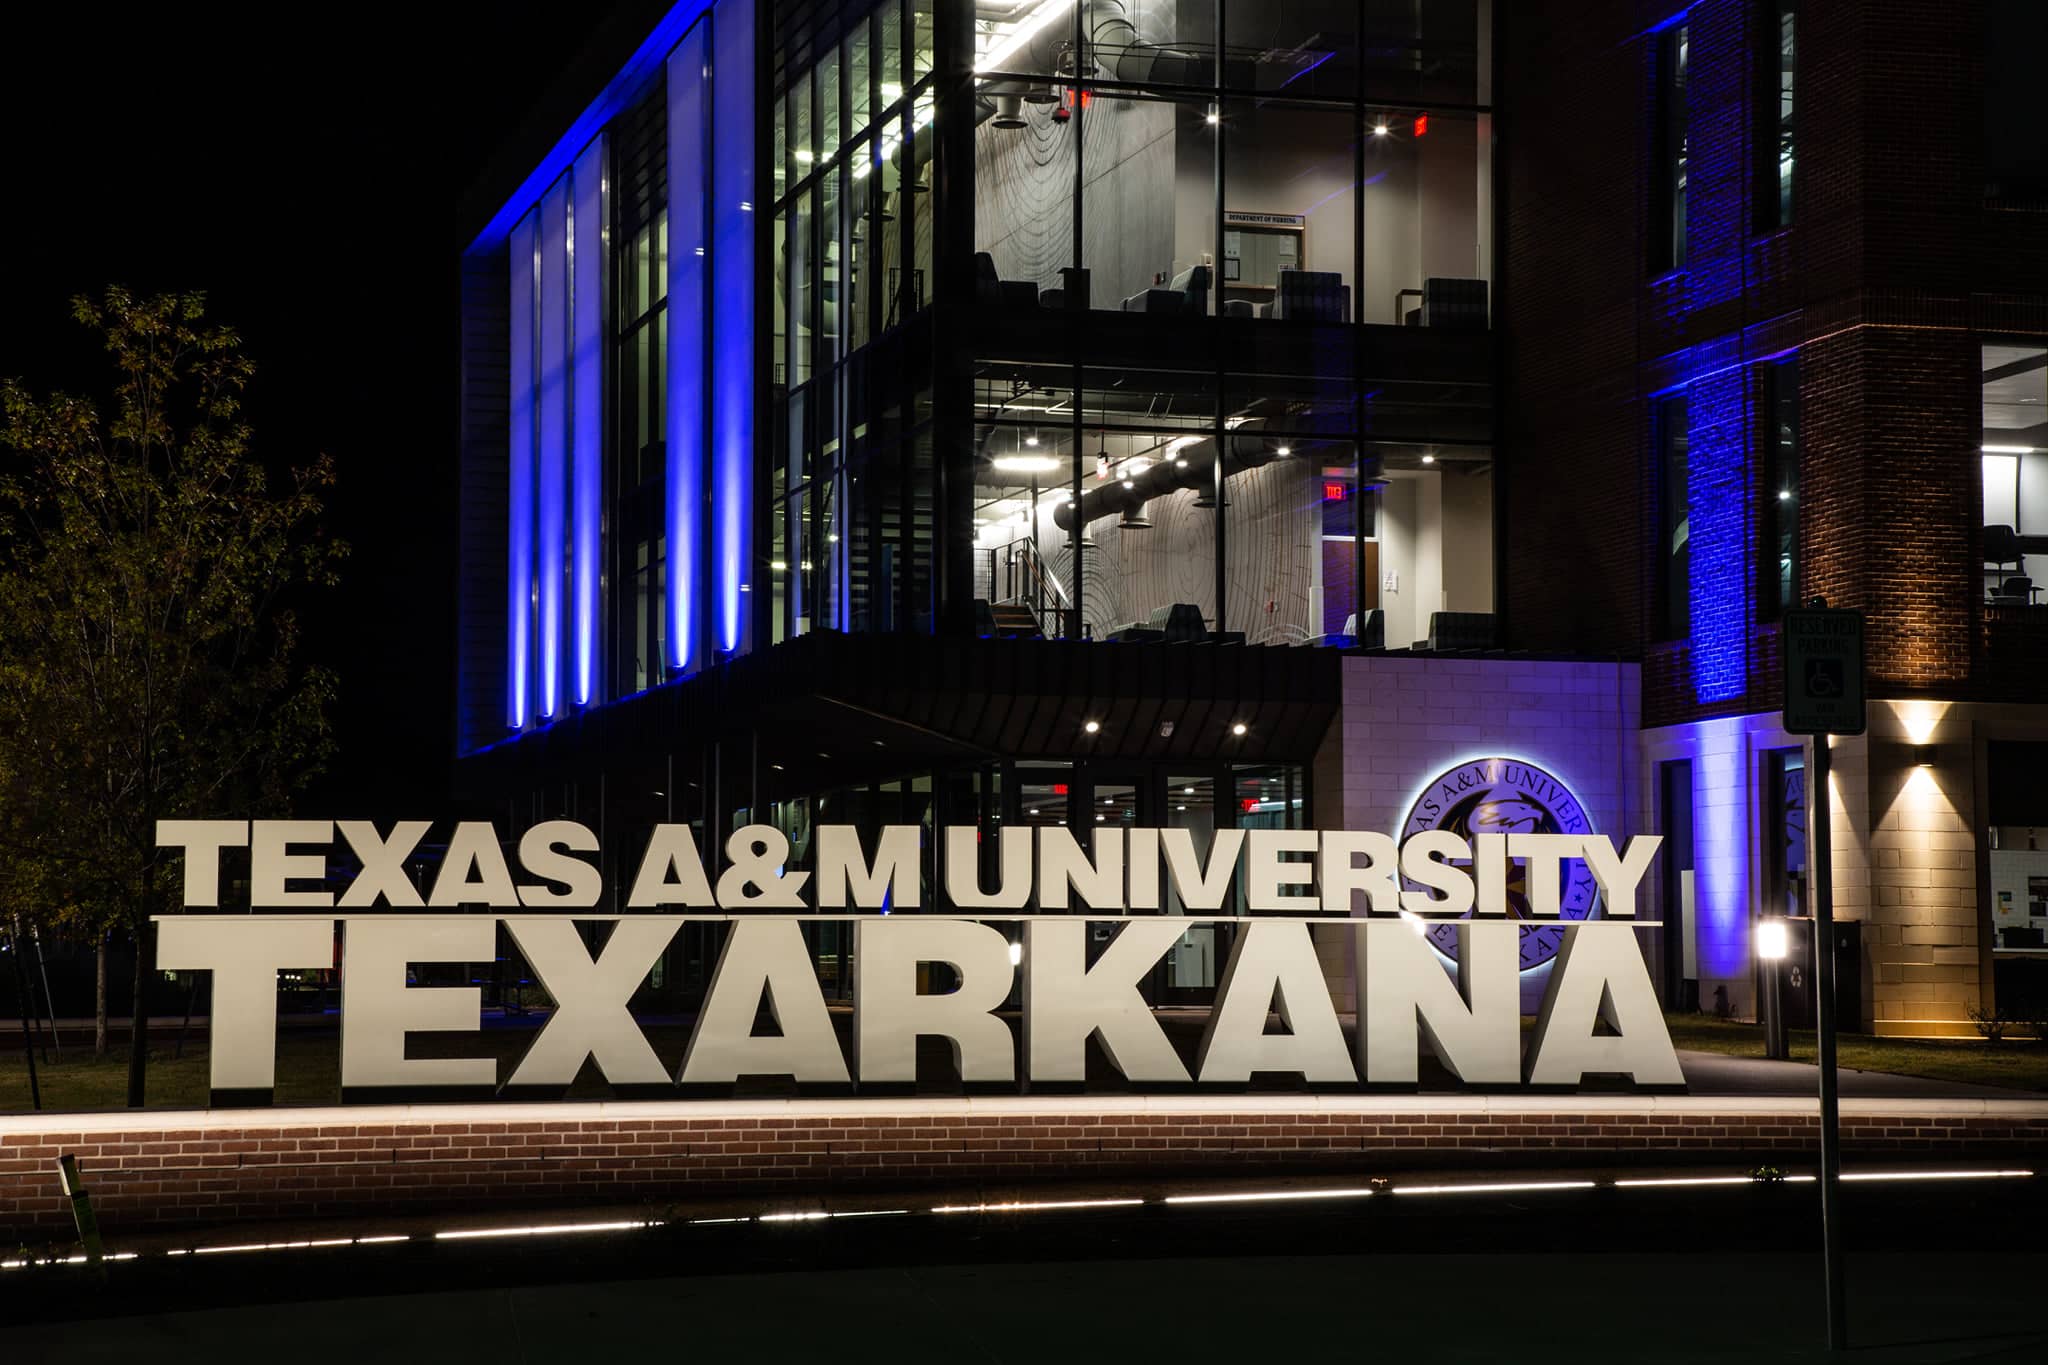 Texas A&M University-Texarkana gets $45 million boost